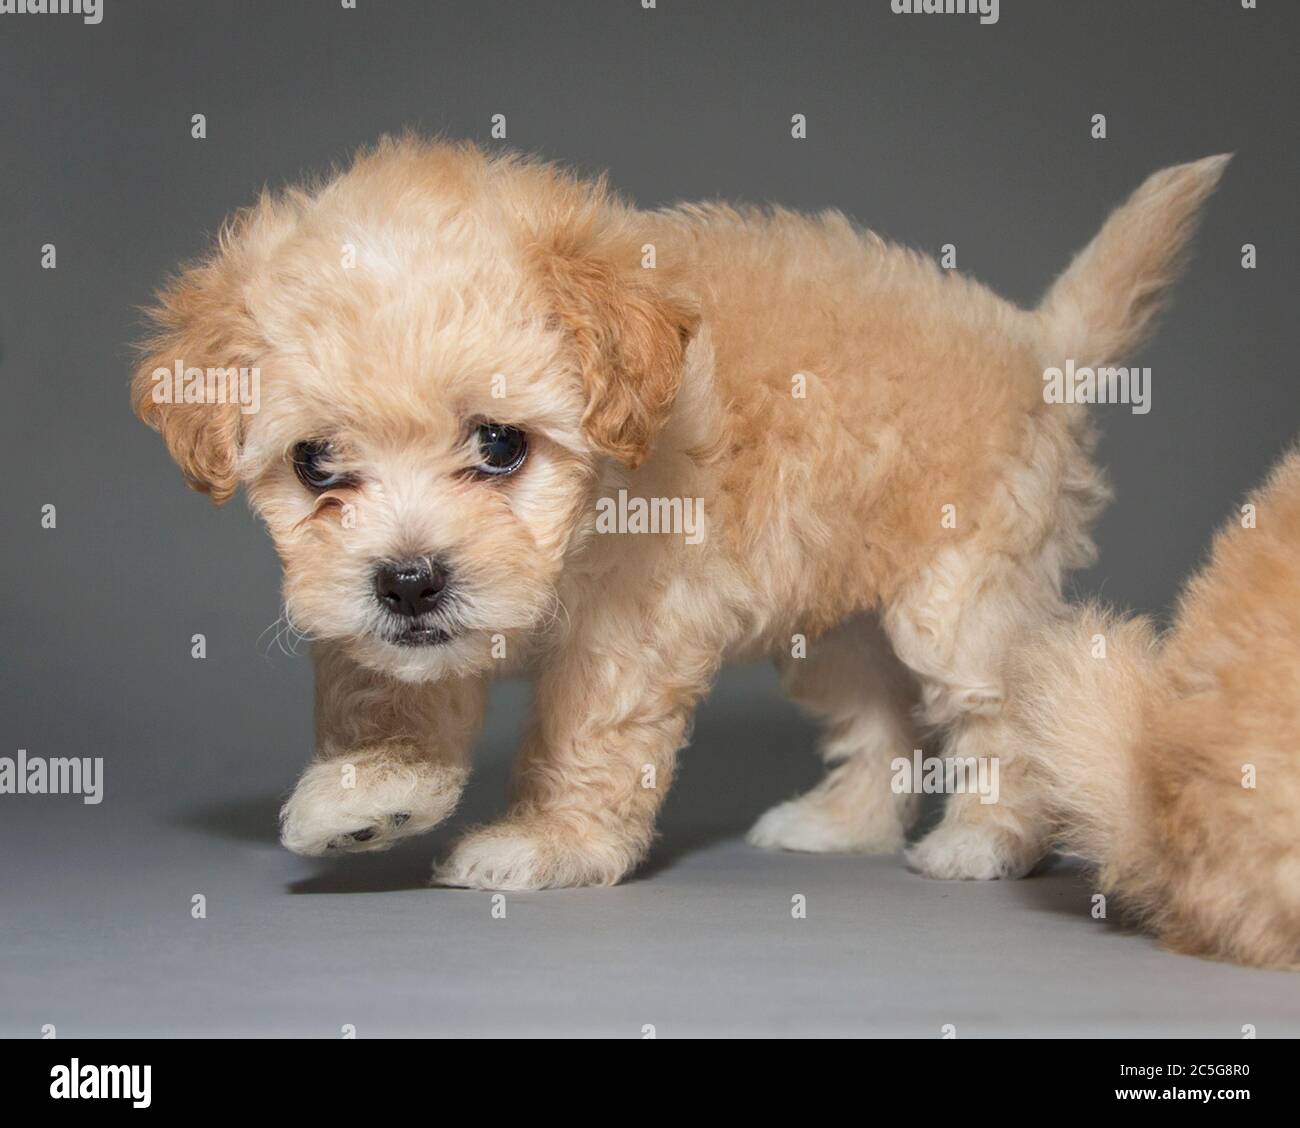 Portrait of a Fuzzy Yellow Bichon Frise Puppy Dog Stock Photo